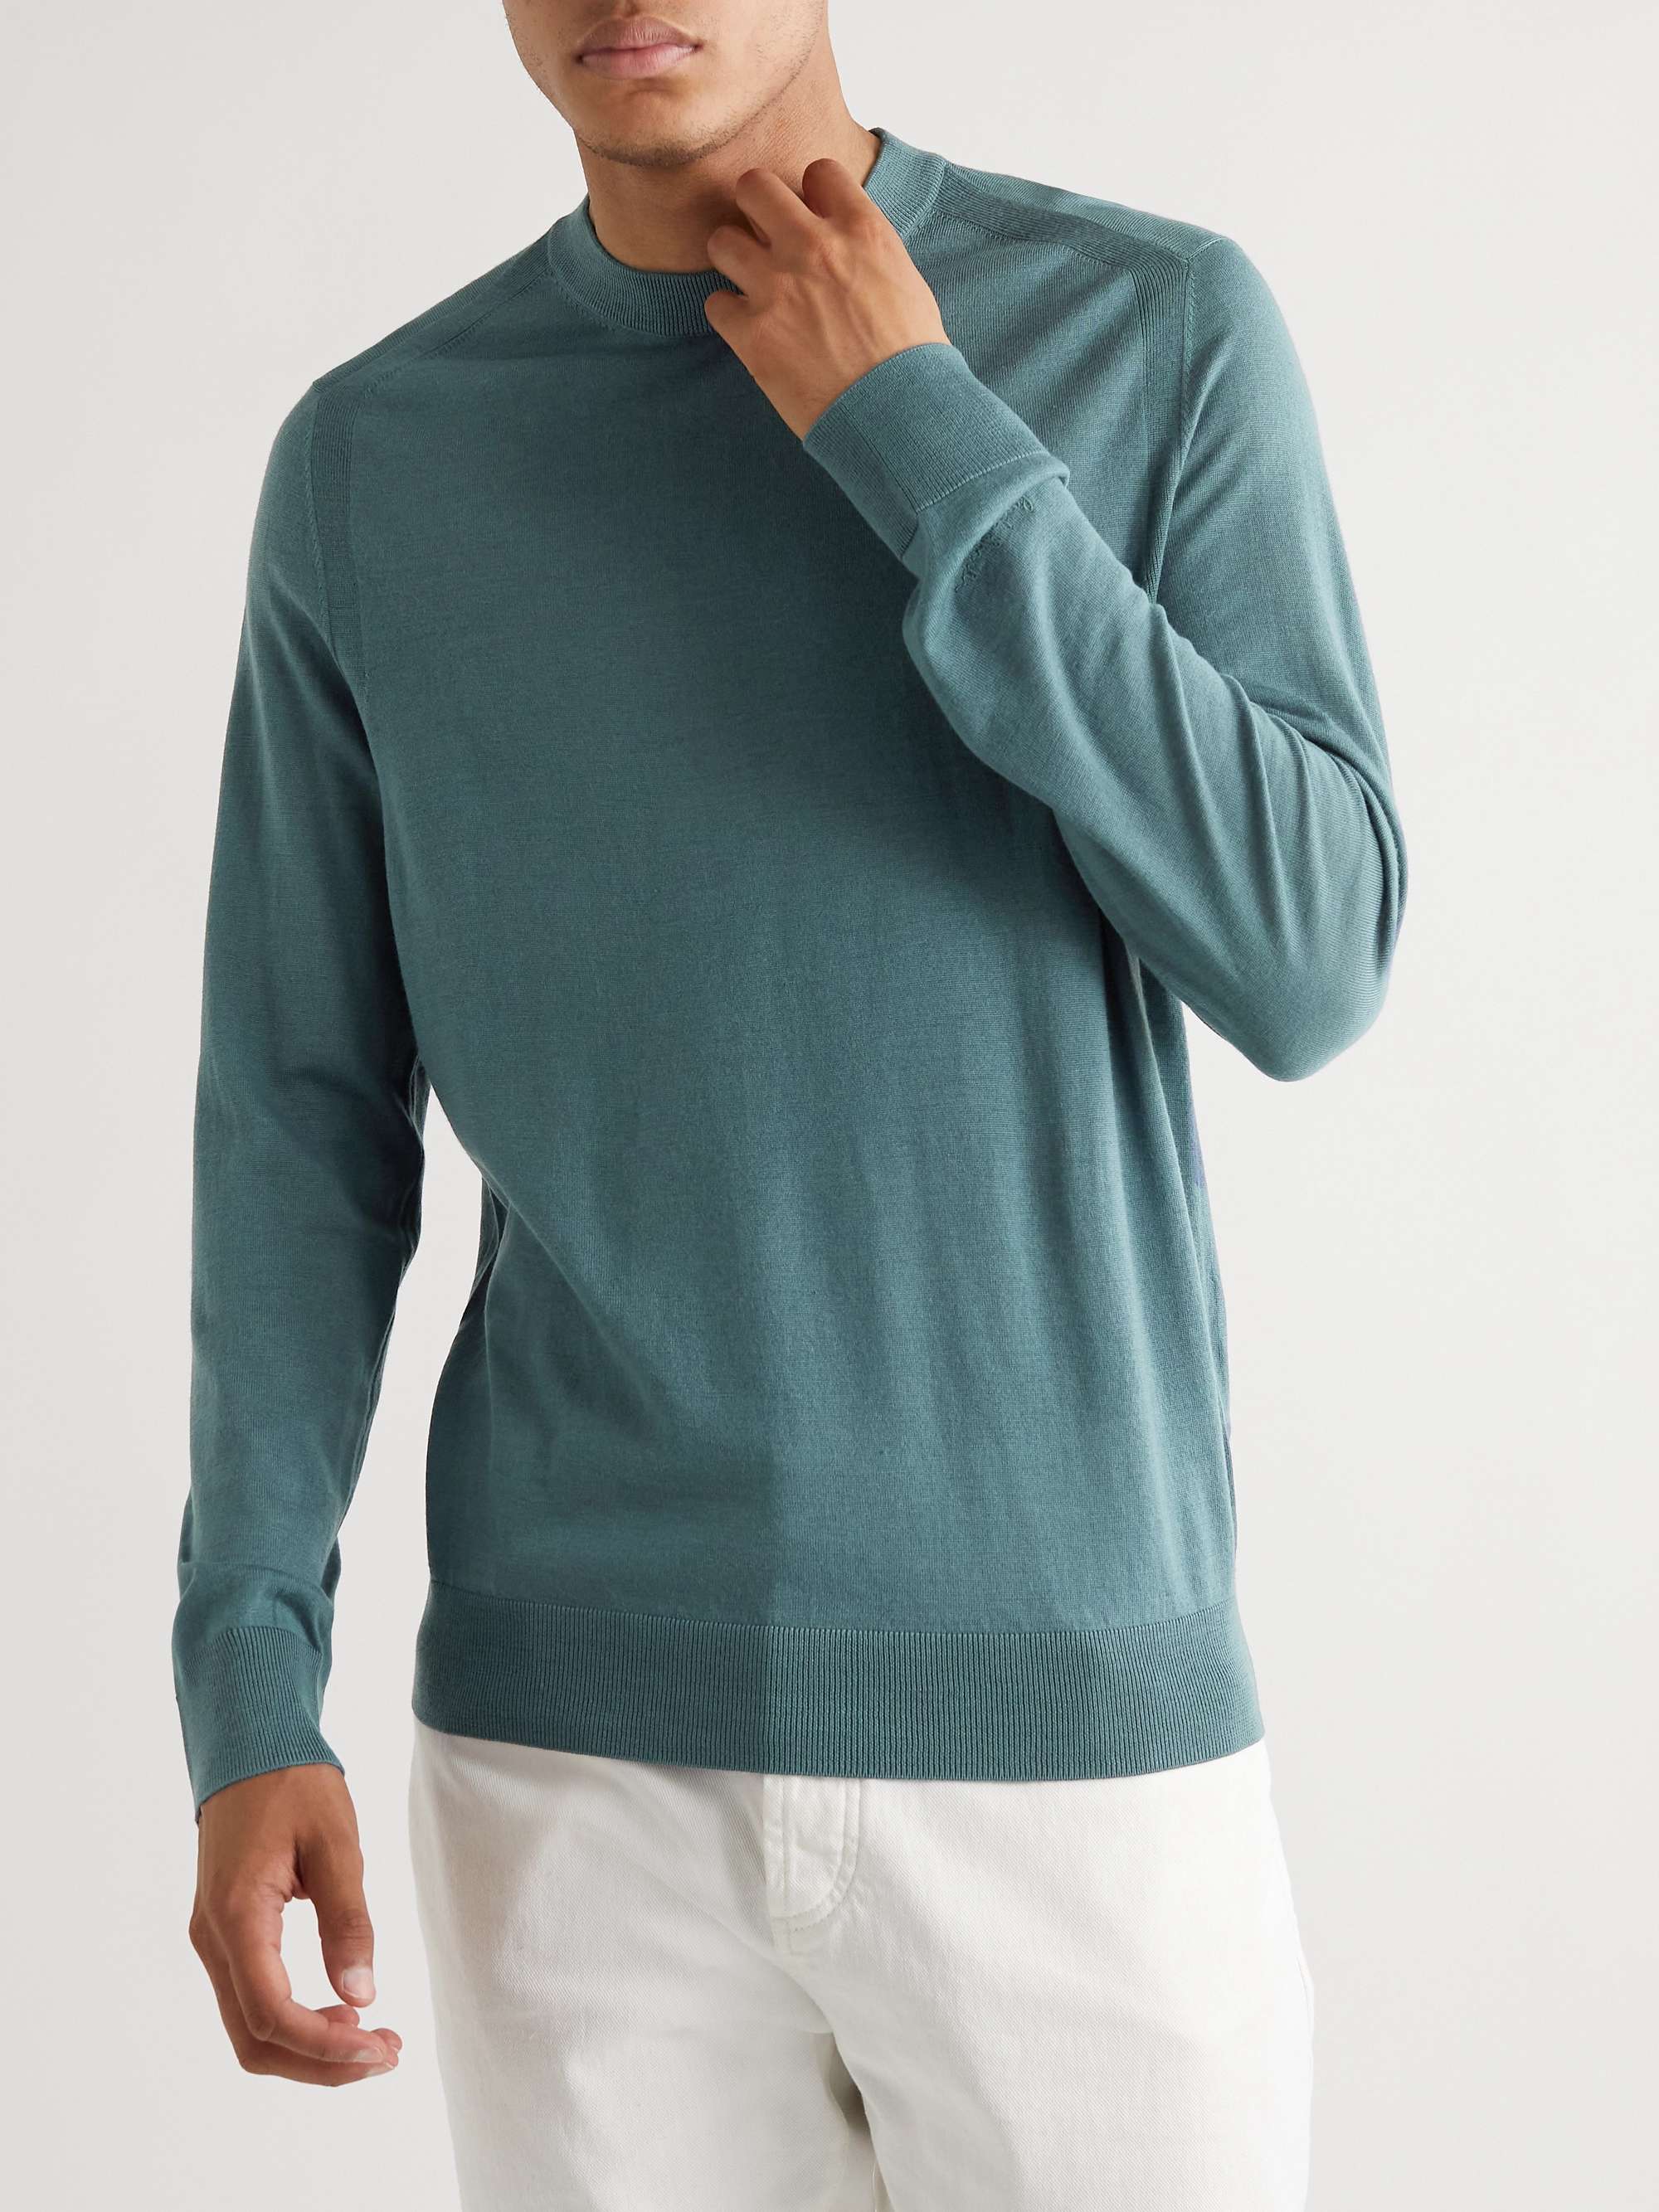 Blue Merino Wool Sweater | PAUL SMITH | MR PORTER